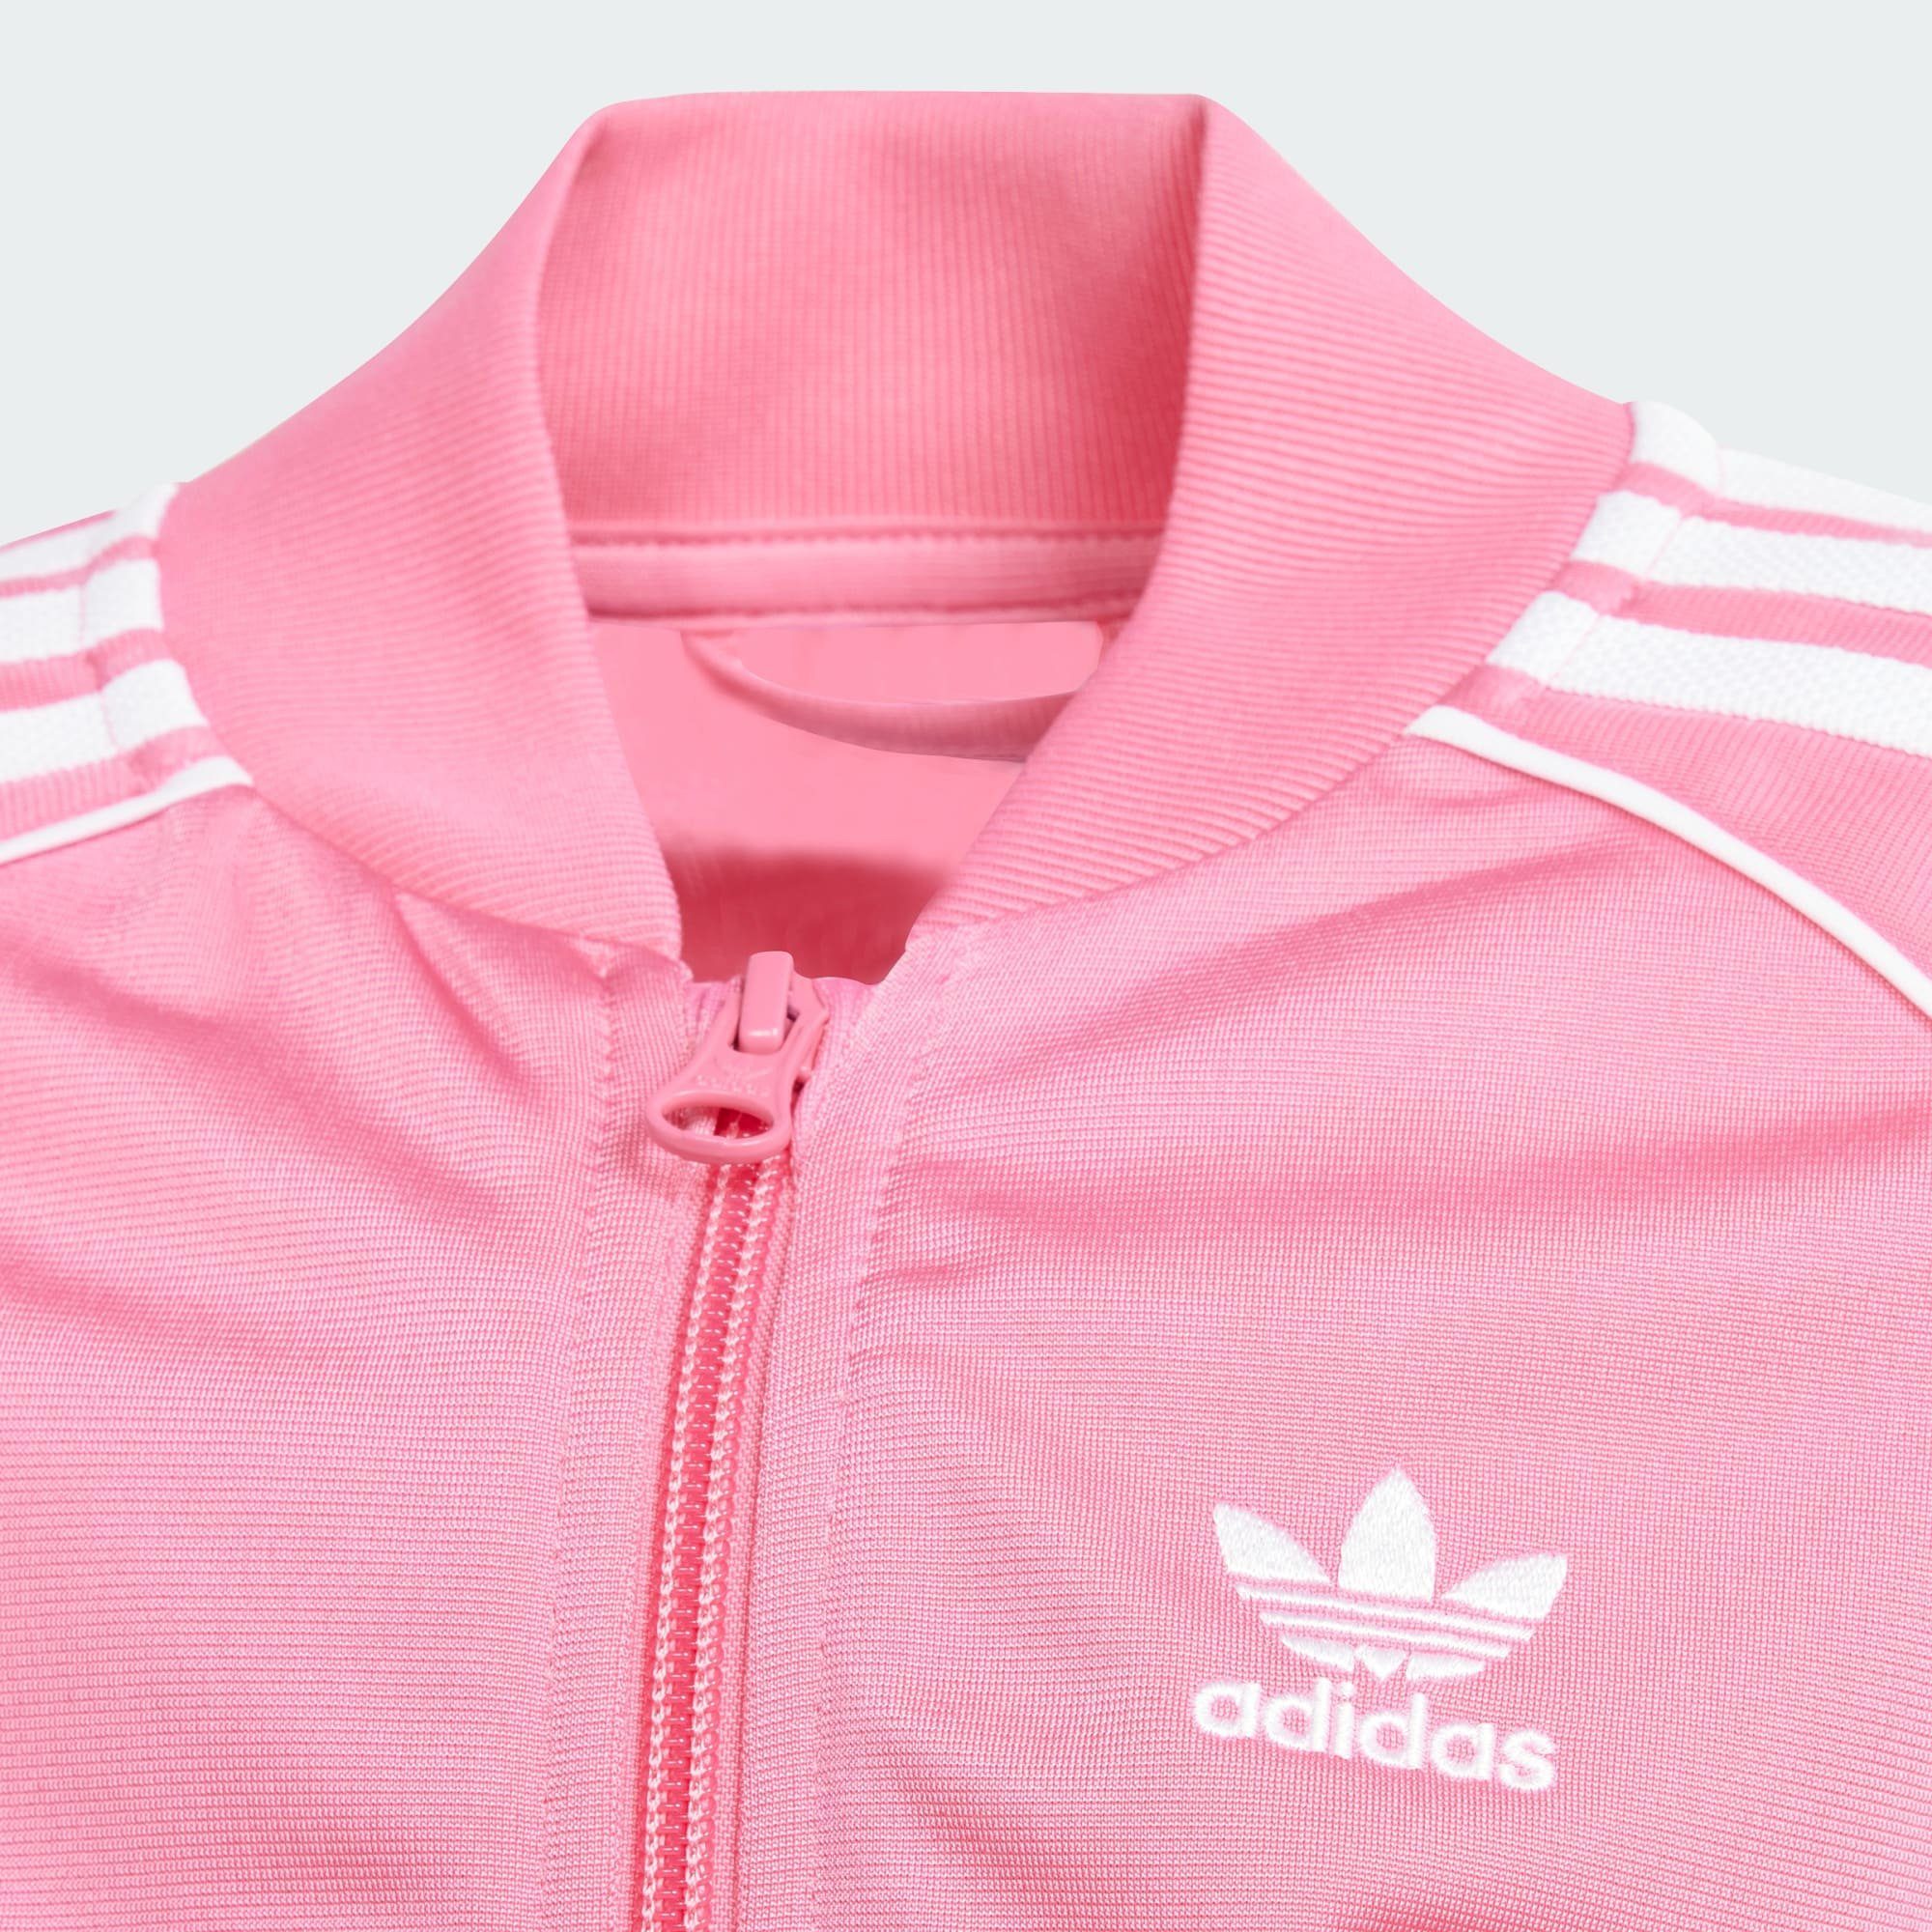 adidas Originals Sportanzug ADICOLOR Pink TRAININGSANZUG SST Fusion